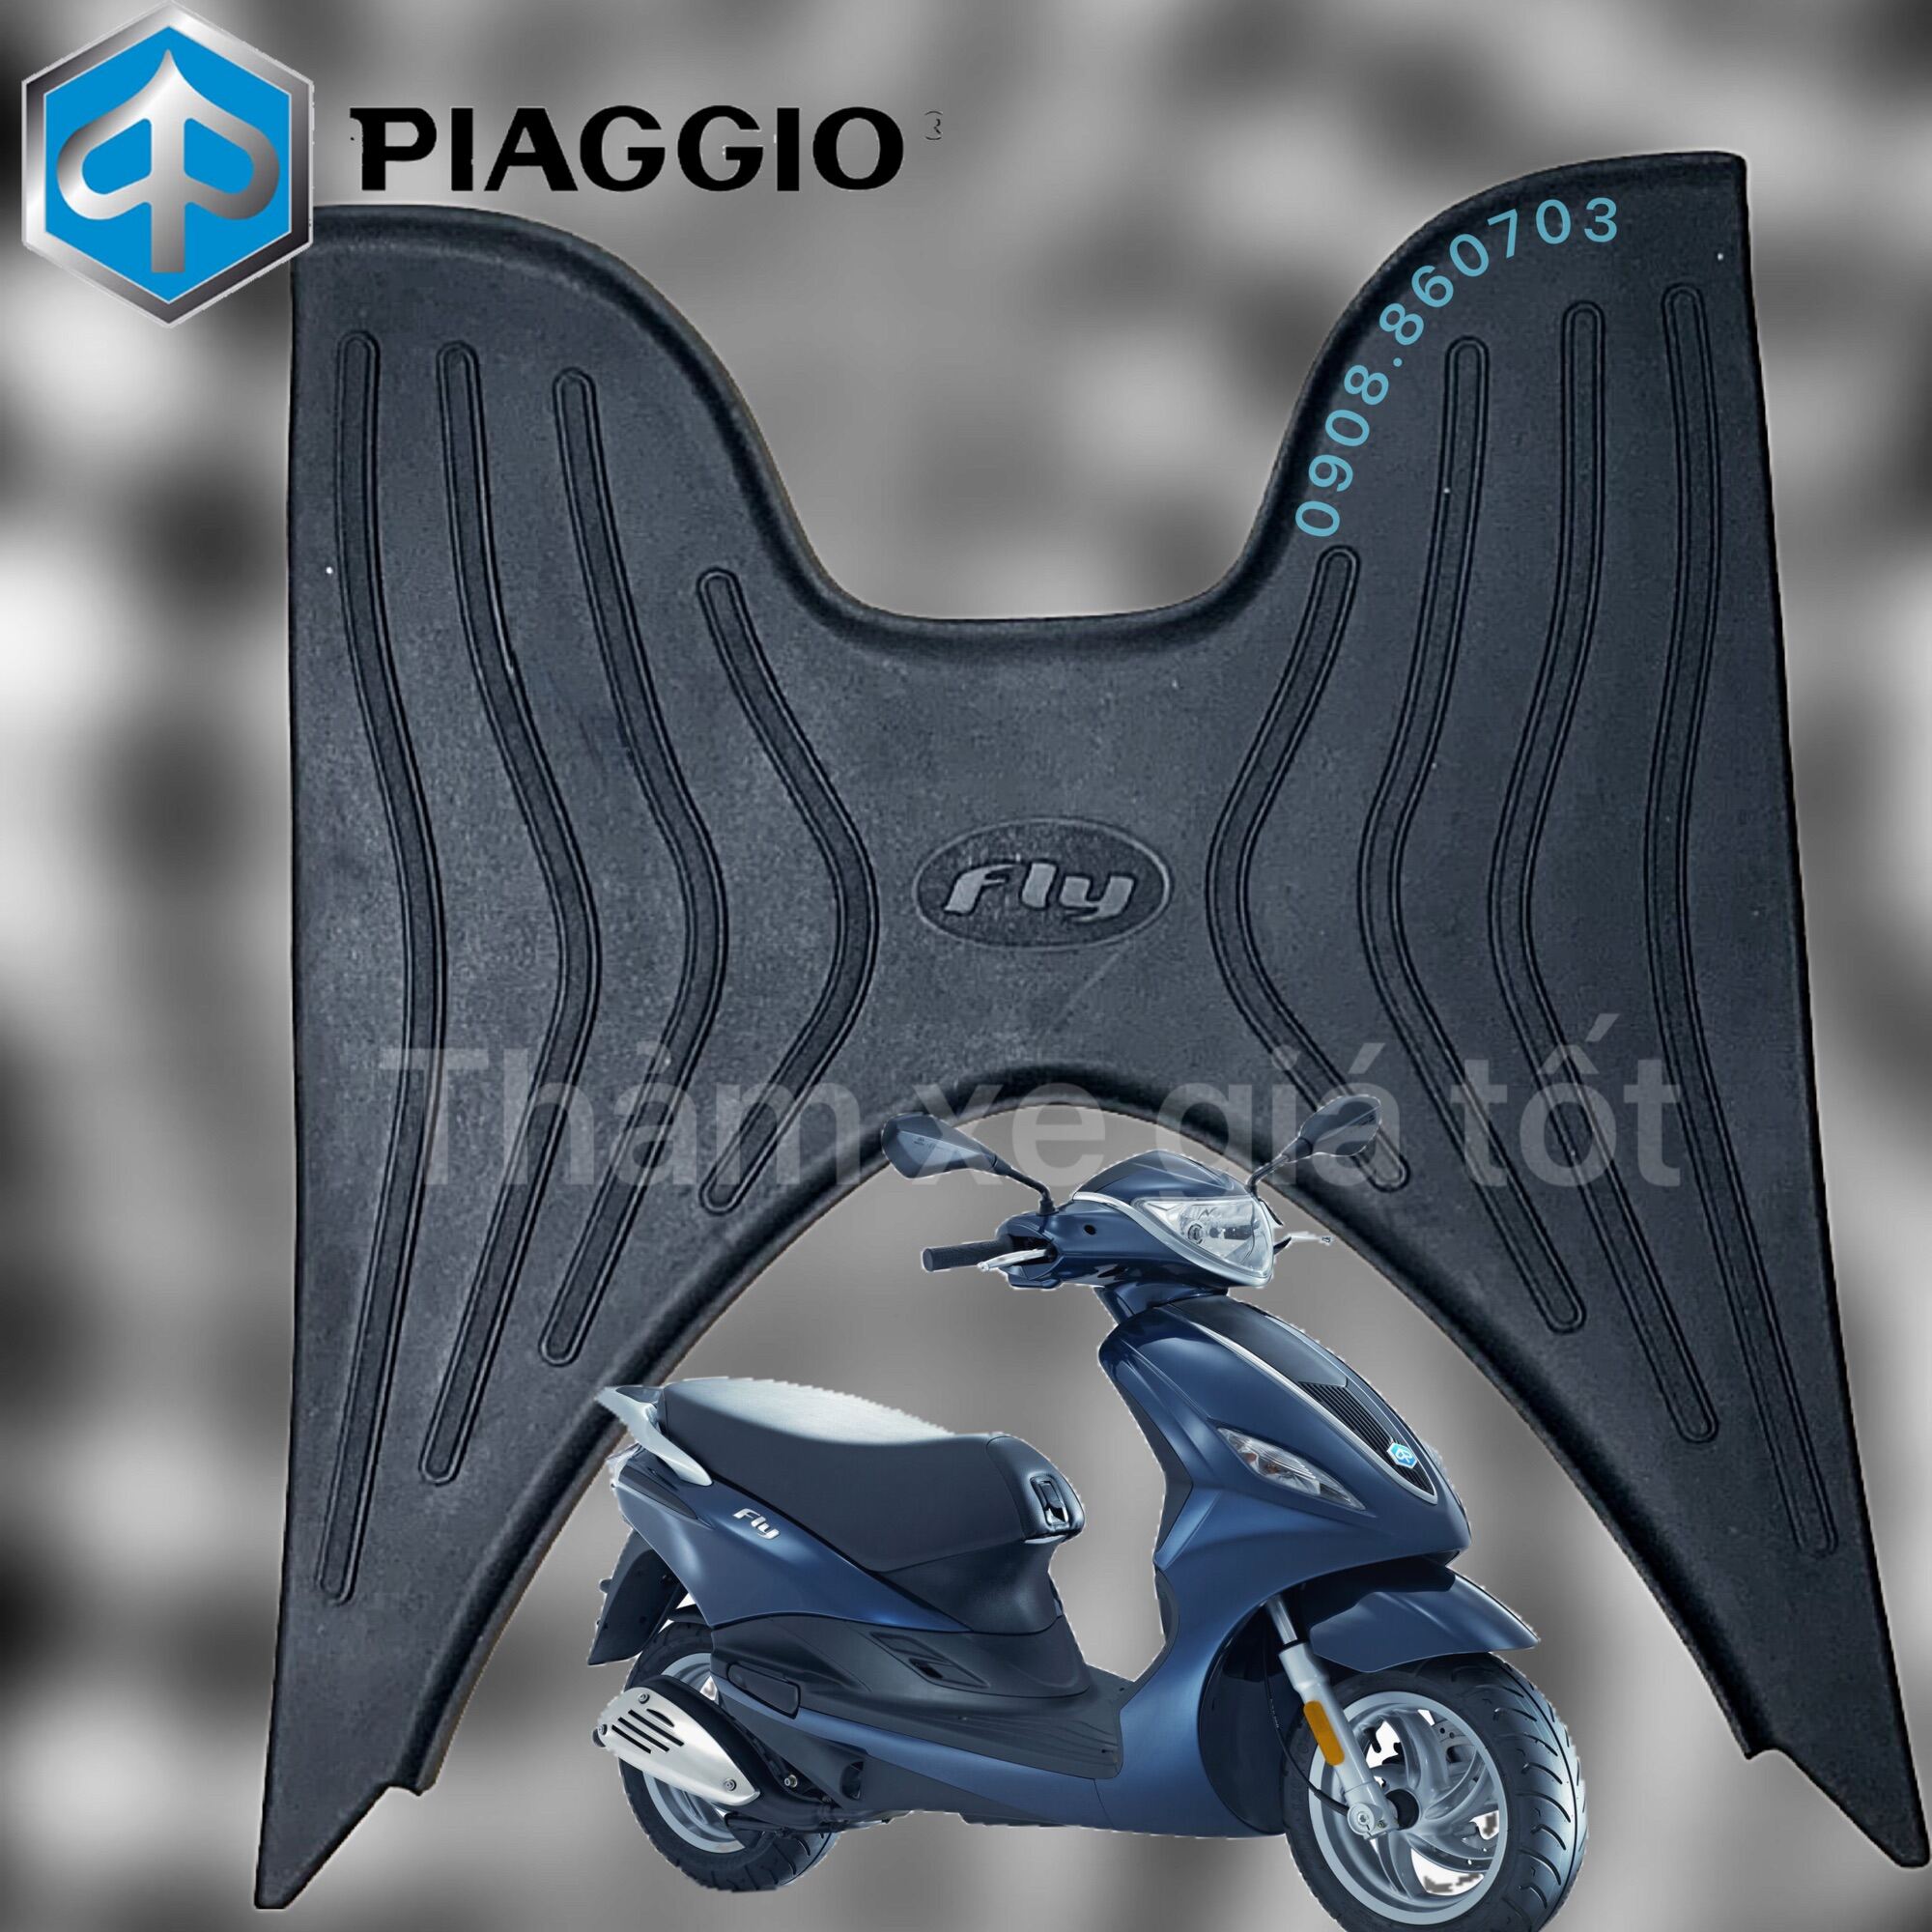 Piaggio Fly 125 2011 Motorcycles  Photos Video Specs Reviews  BikeNet